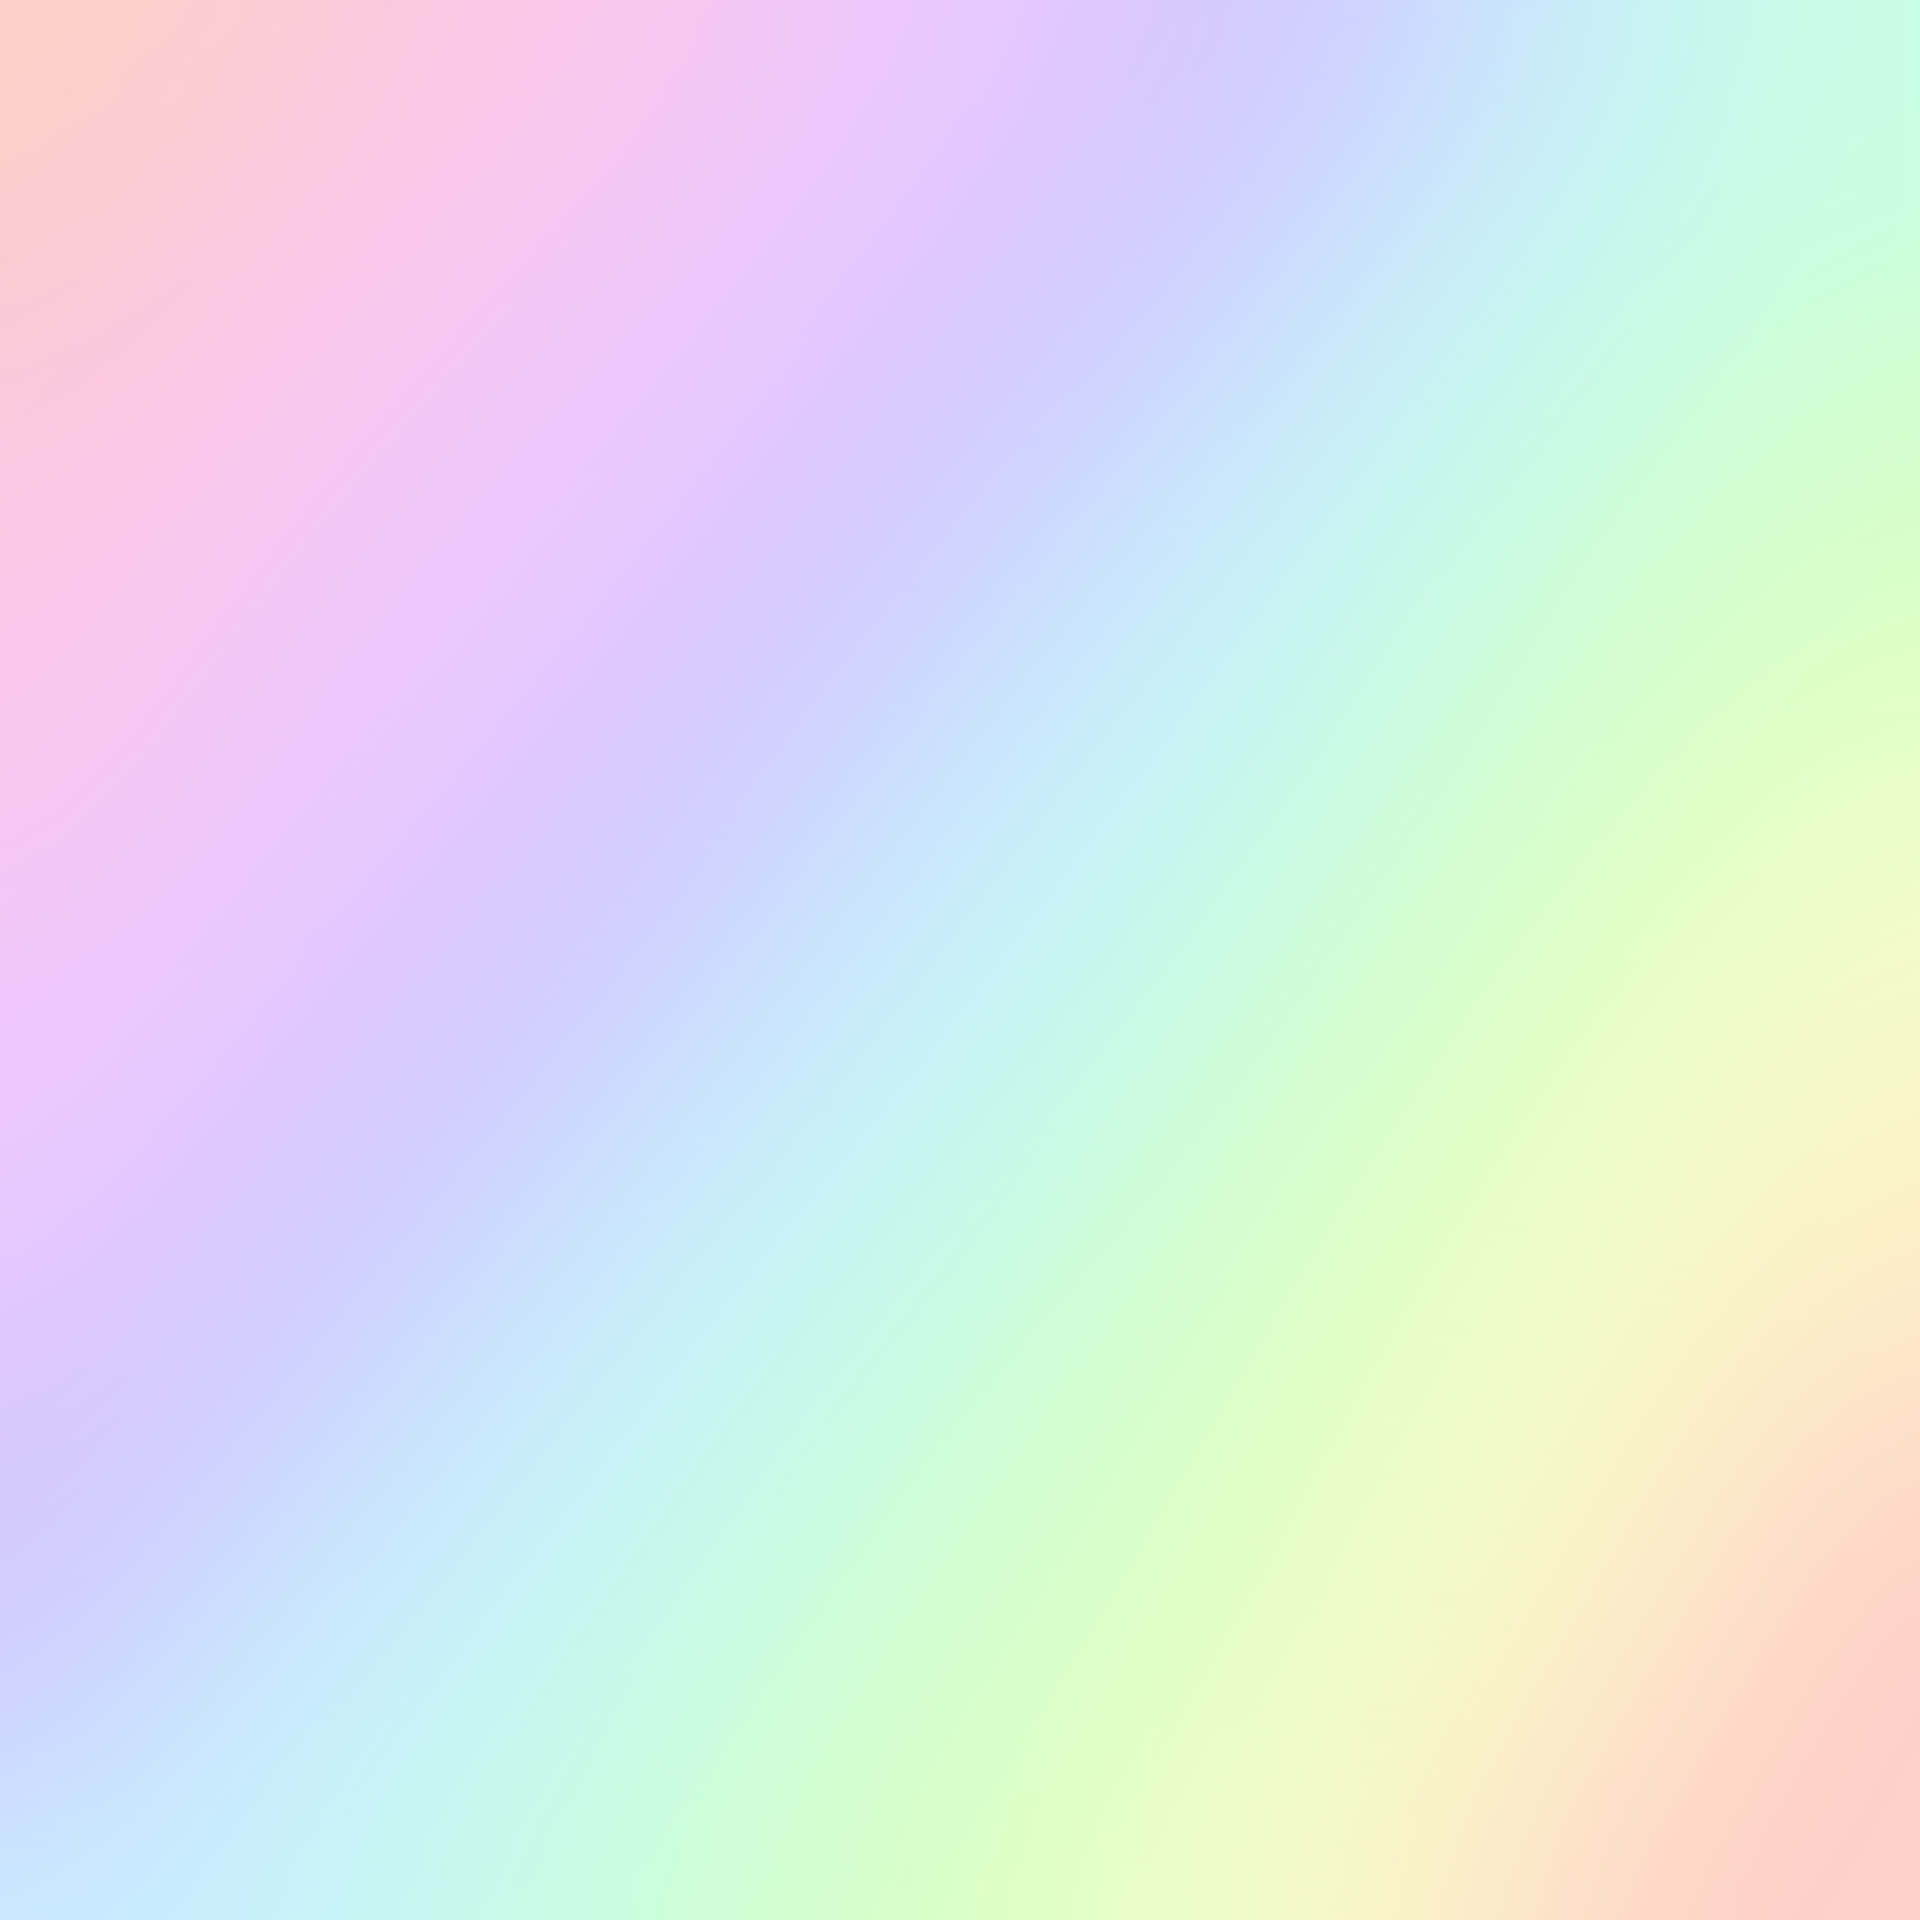 A spectrum of beautiful pastel colors